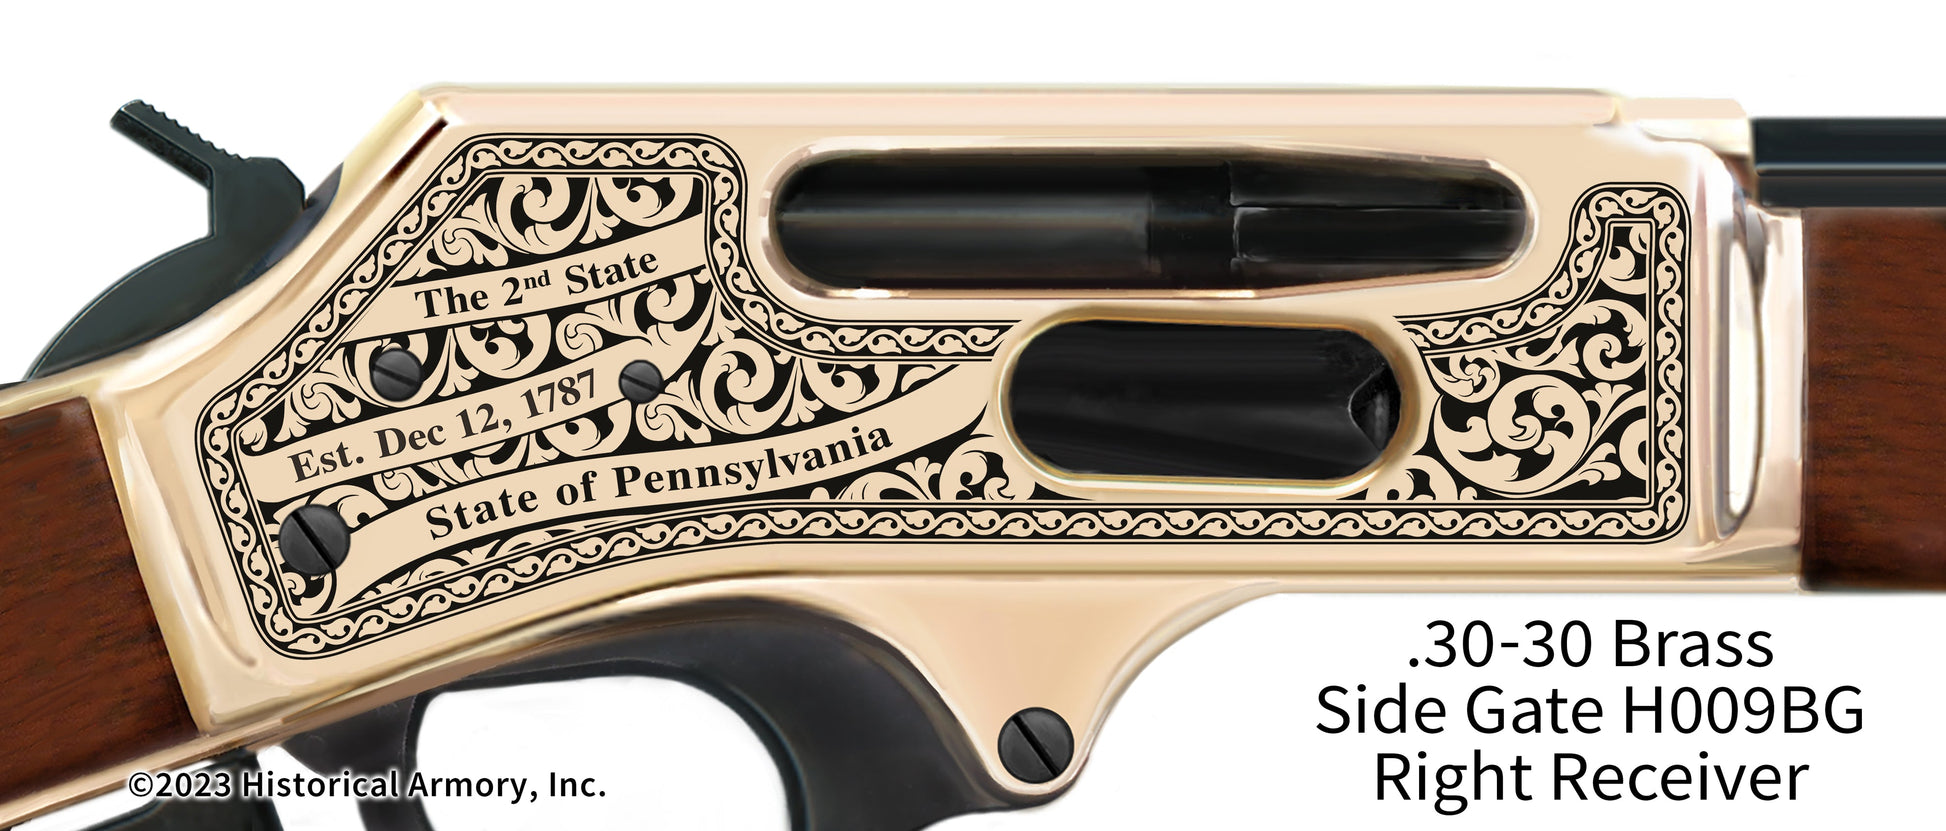 Greene County Pennsylvania Engraved Henry .30-30 Brass Side Gate Rifle